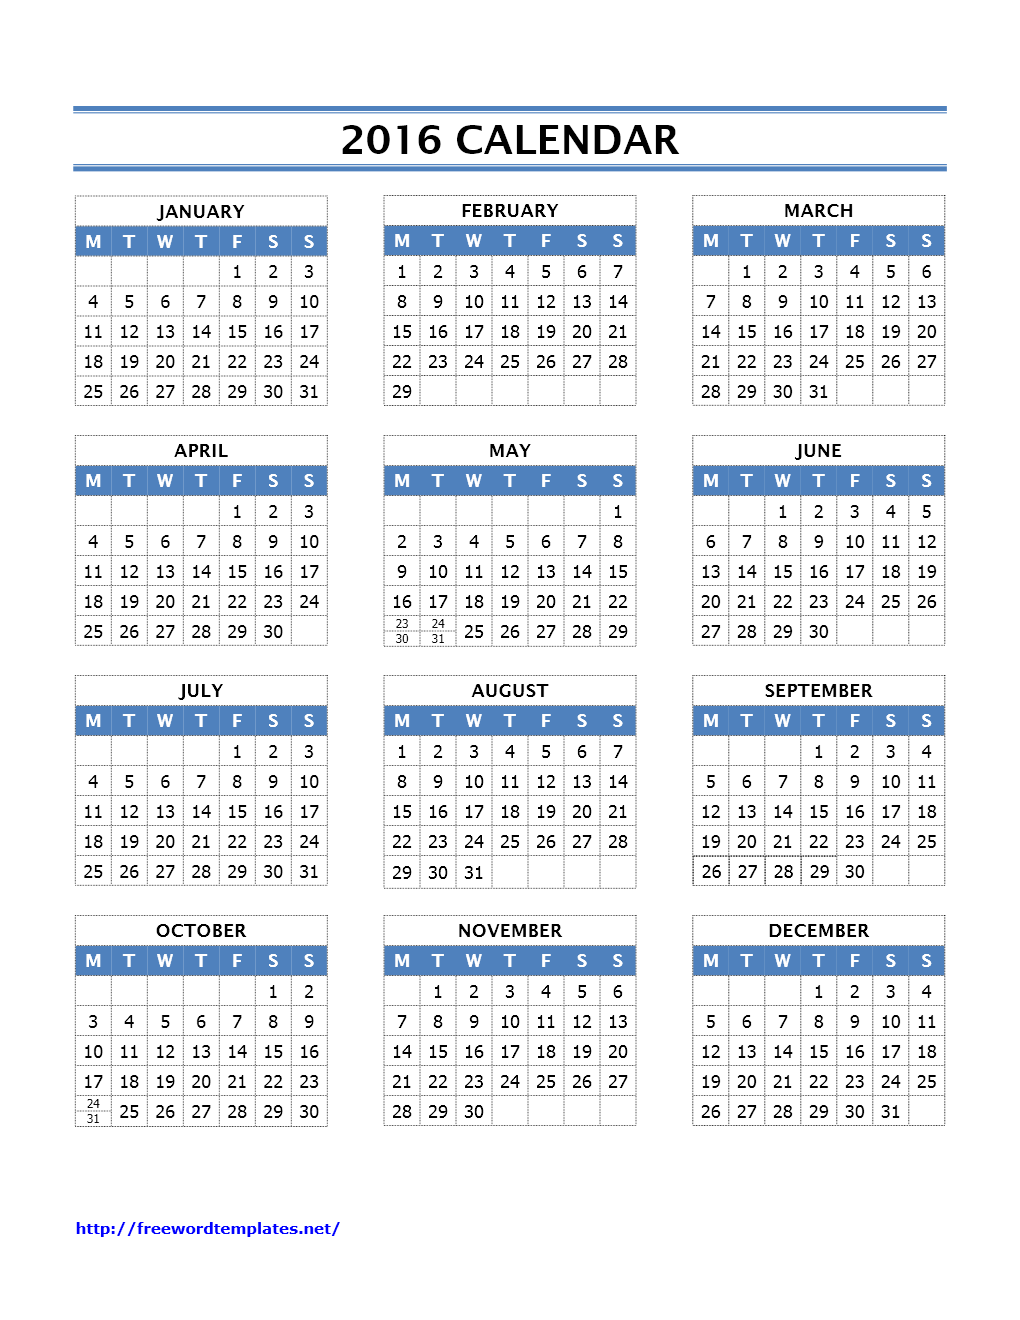 2016 Year Calendar Template - Word